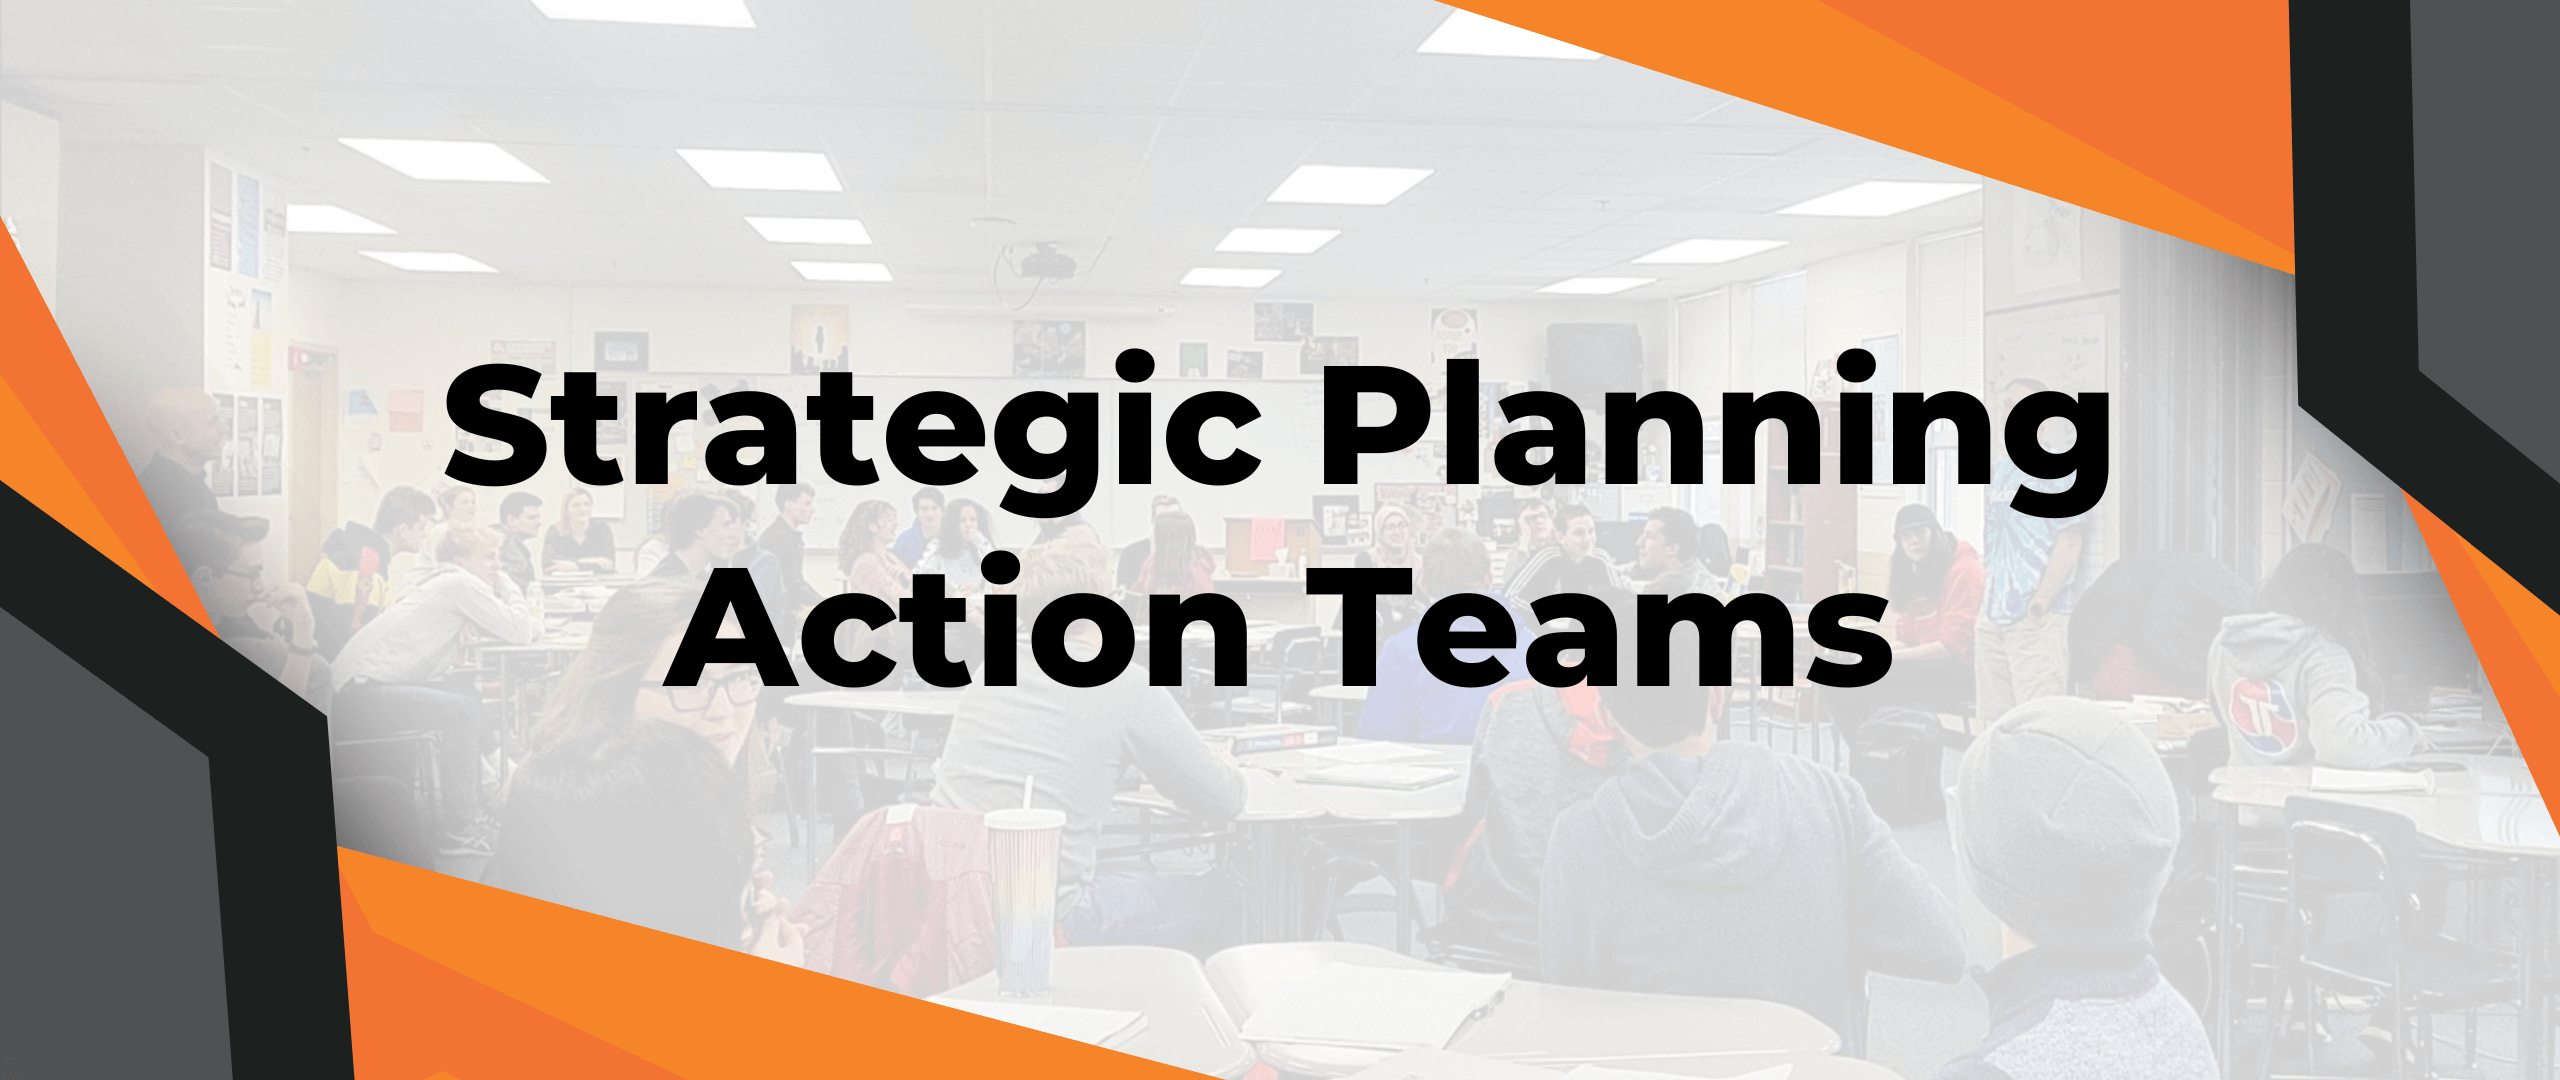 Strategic Planning Action Teams